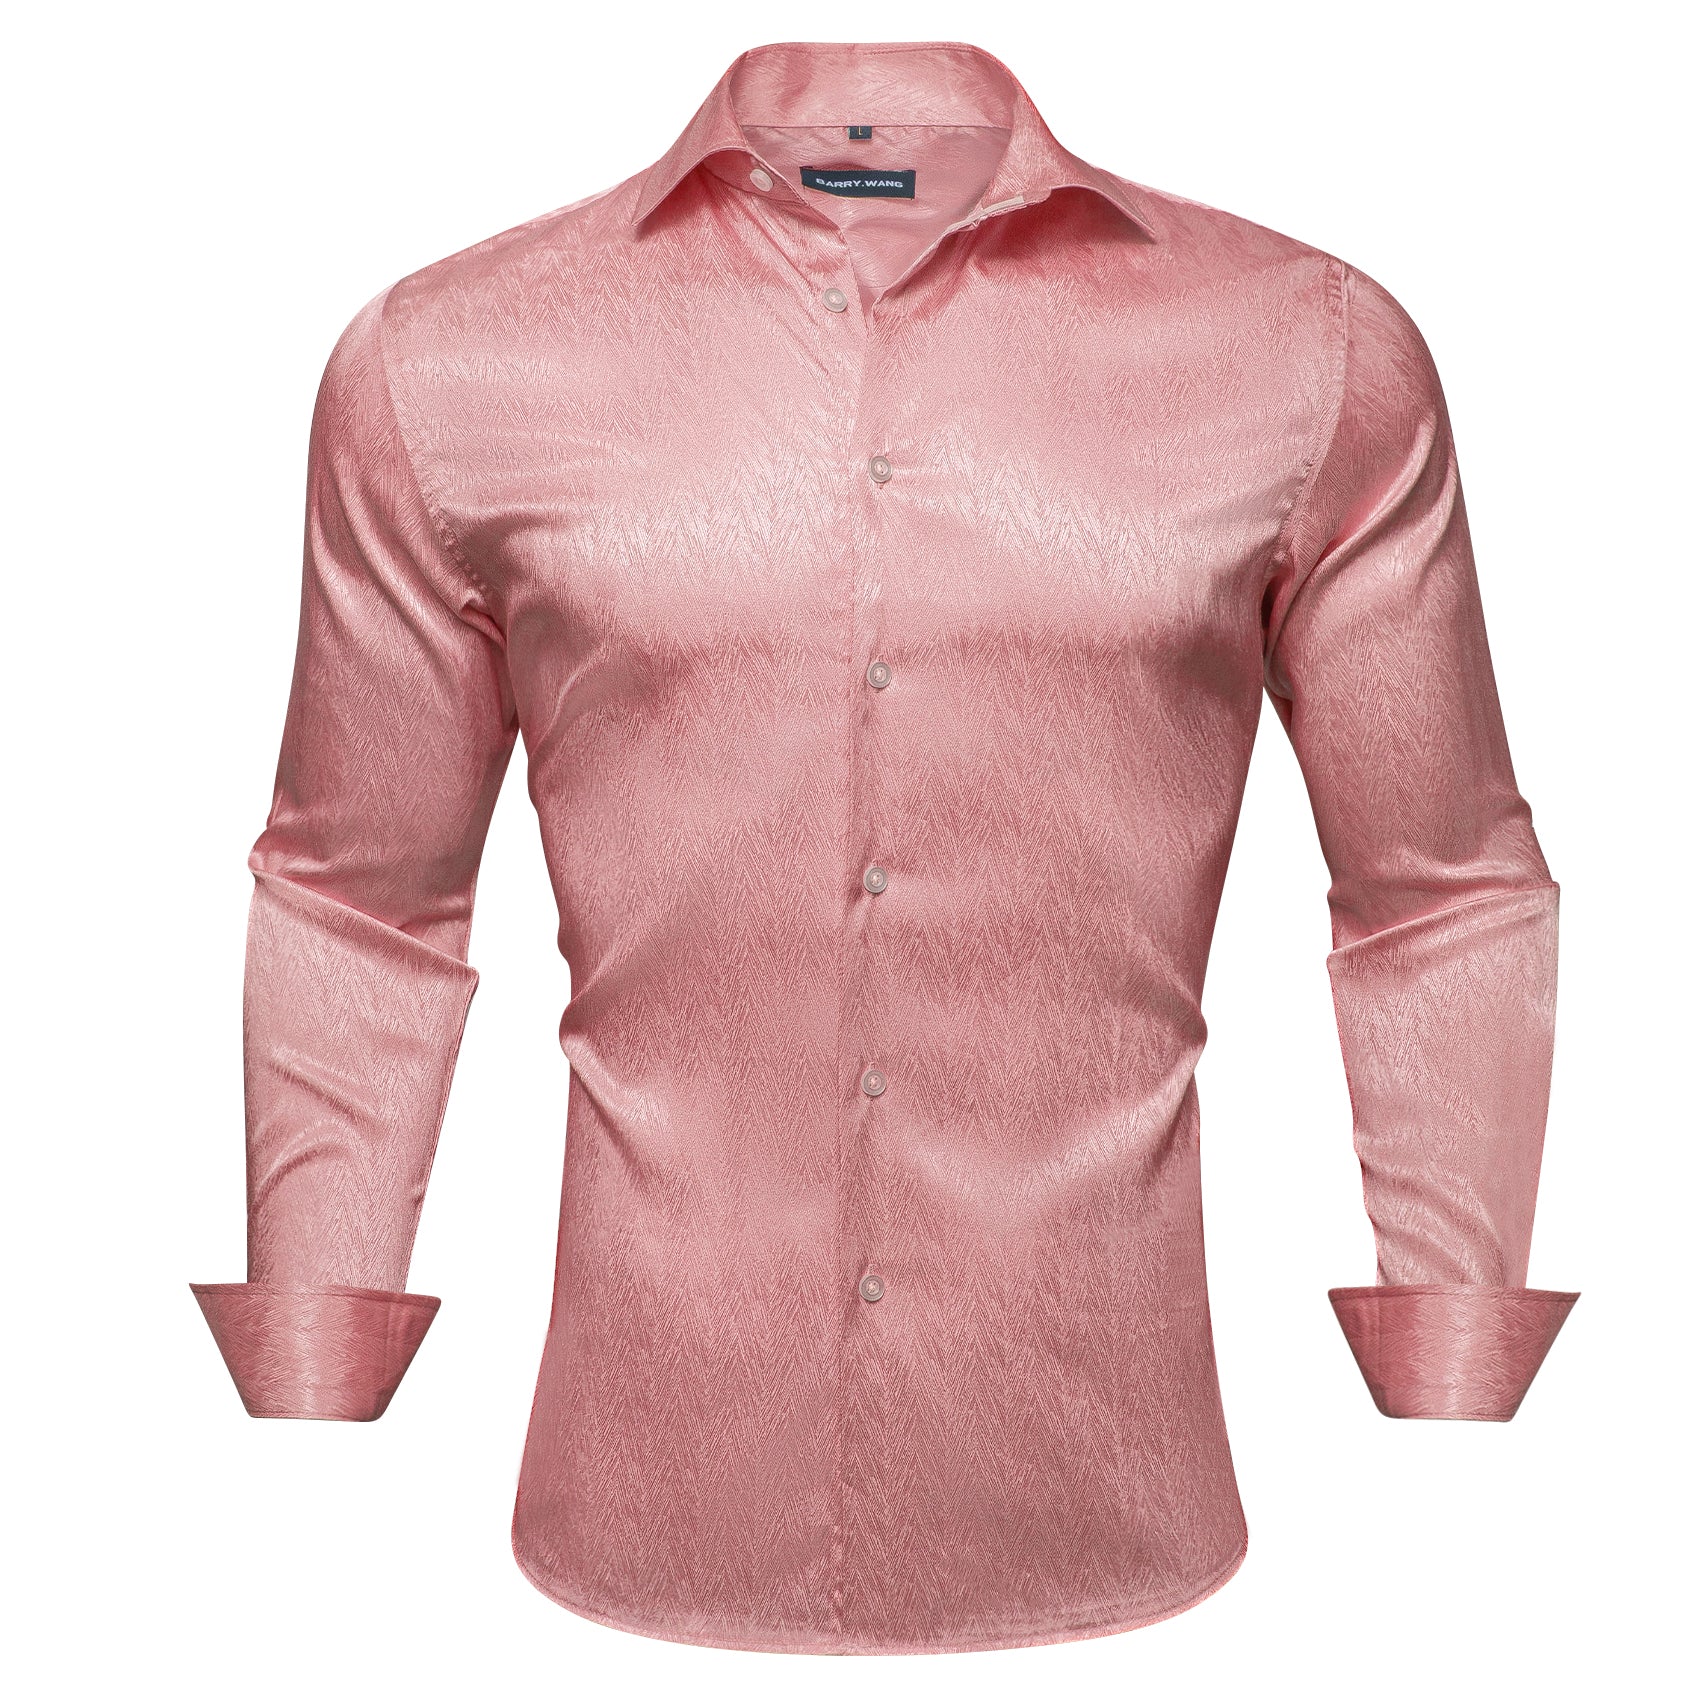 Barry.wang Fashion Rose Pink Solid Silk Shirt